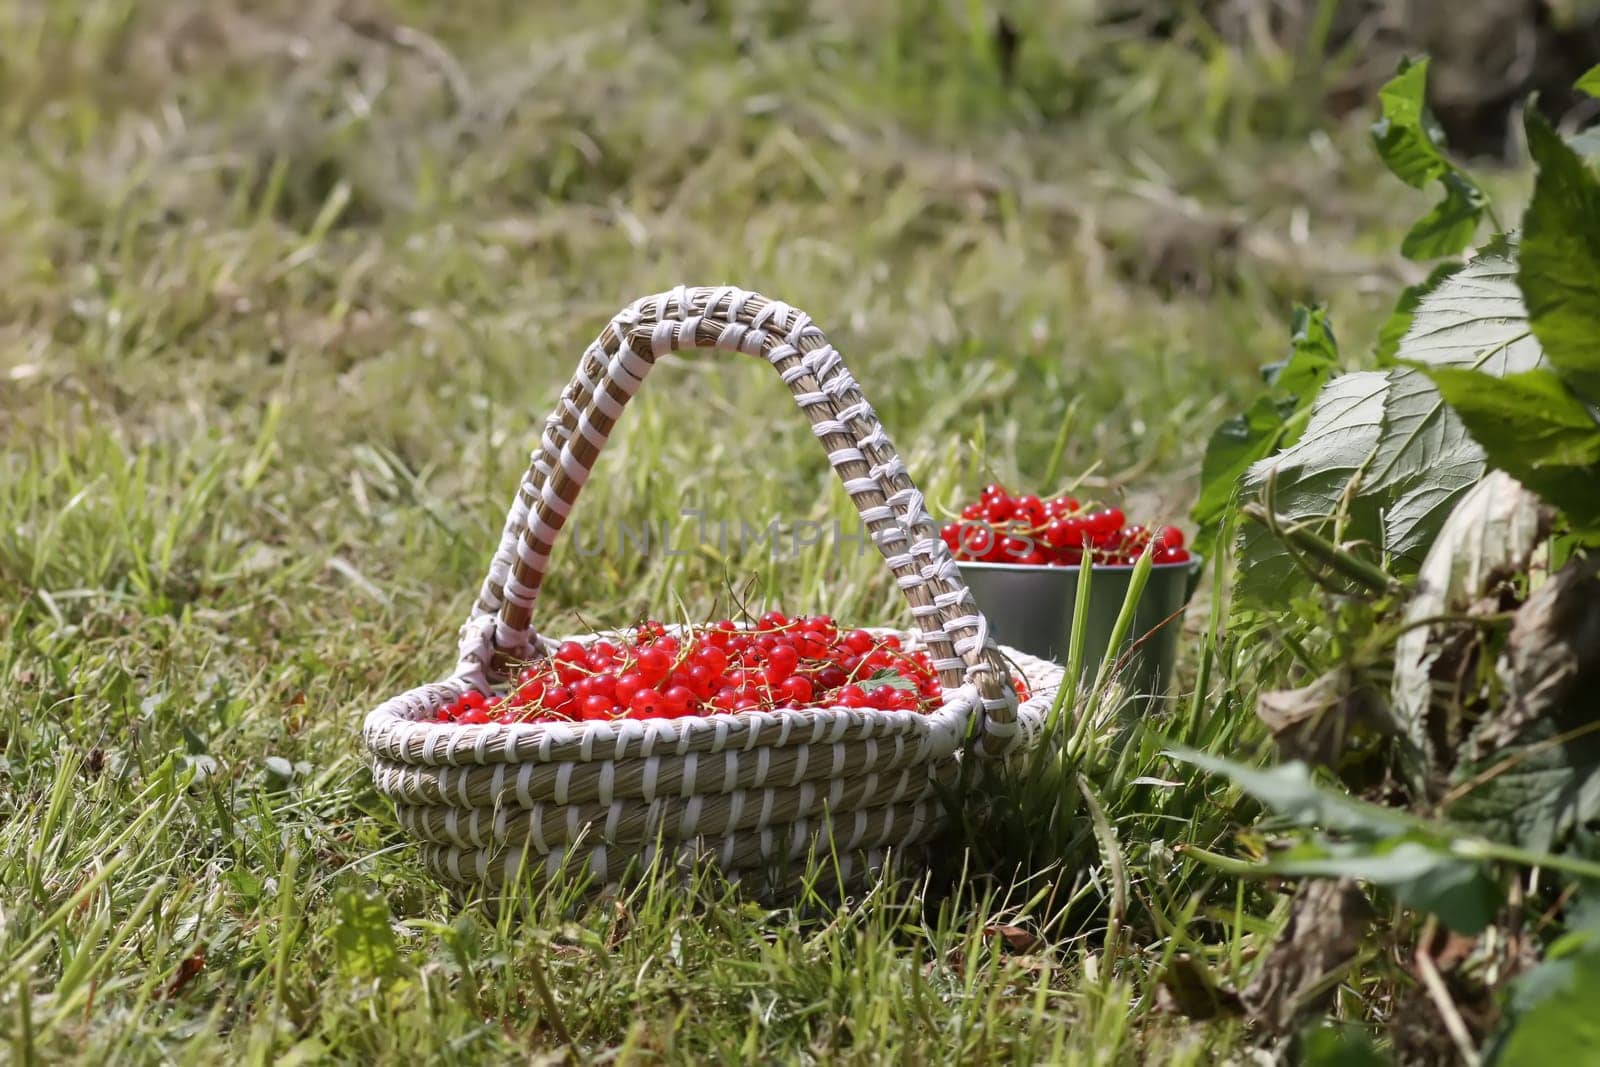 Basket with red currants in the basket. Fresh ripe red berries. Healthy food ingredients.